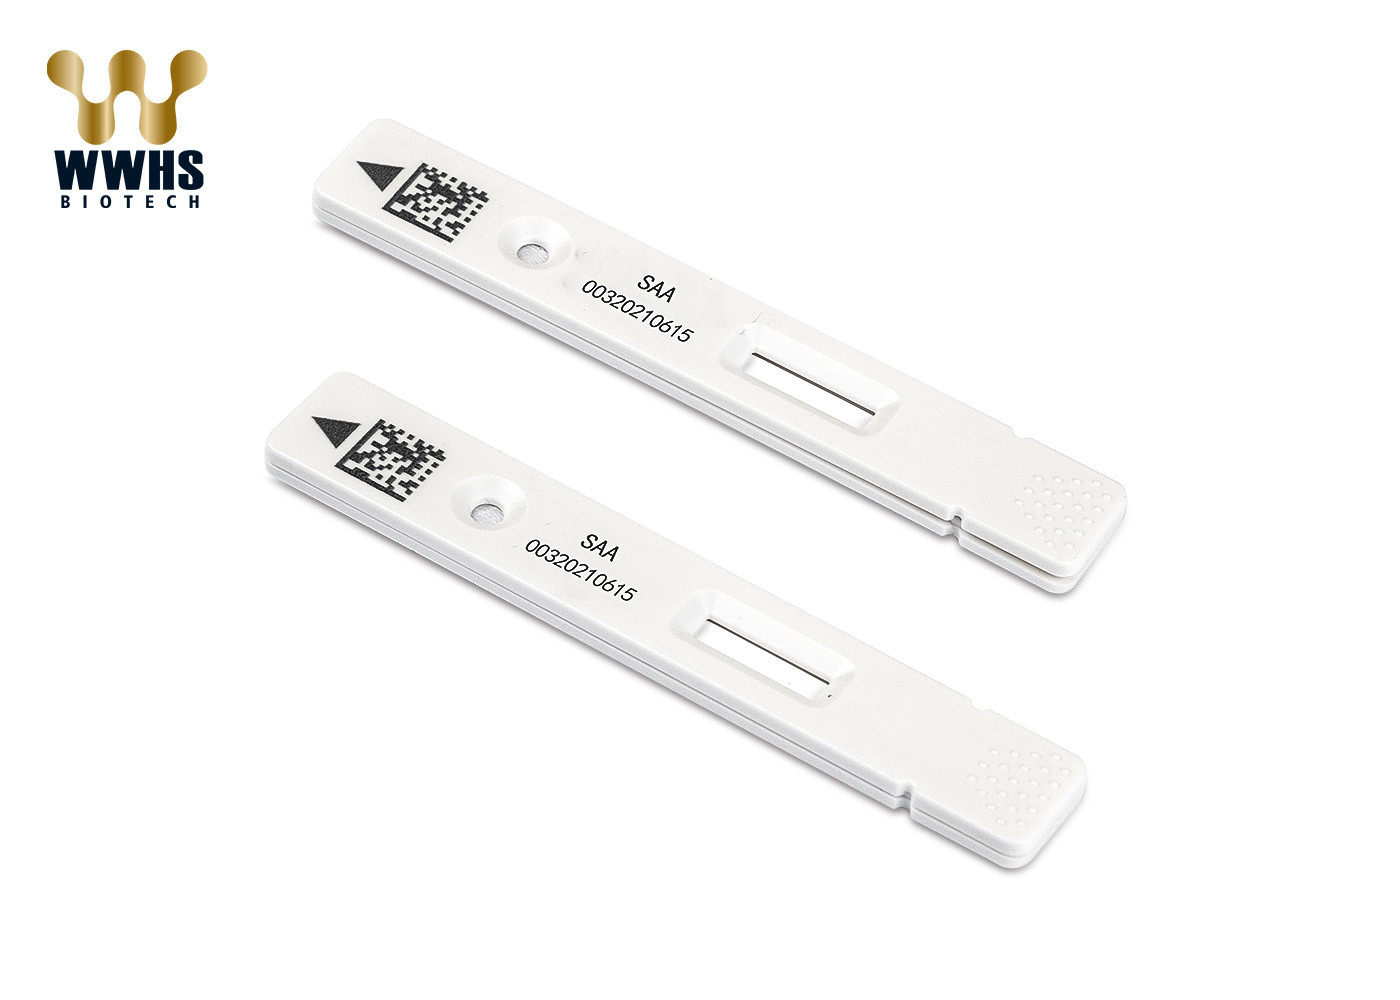 SAA Rapid Test Kit FIA POCT Rapid Diagnostics IVD Human Test Cassette